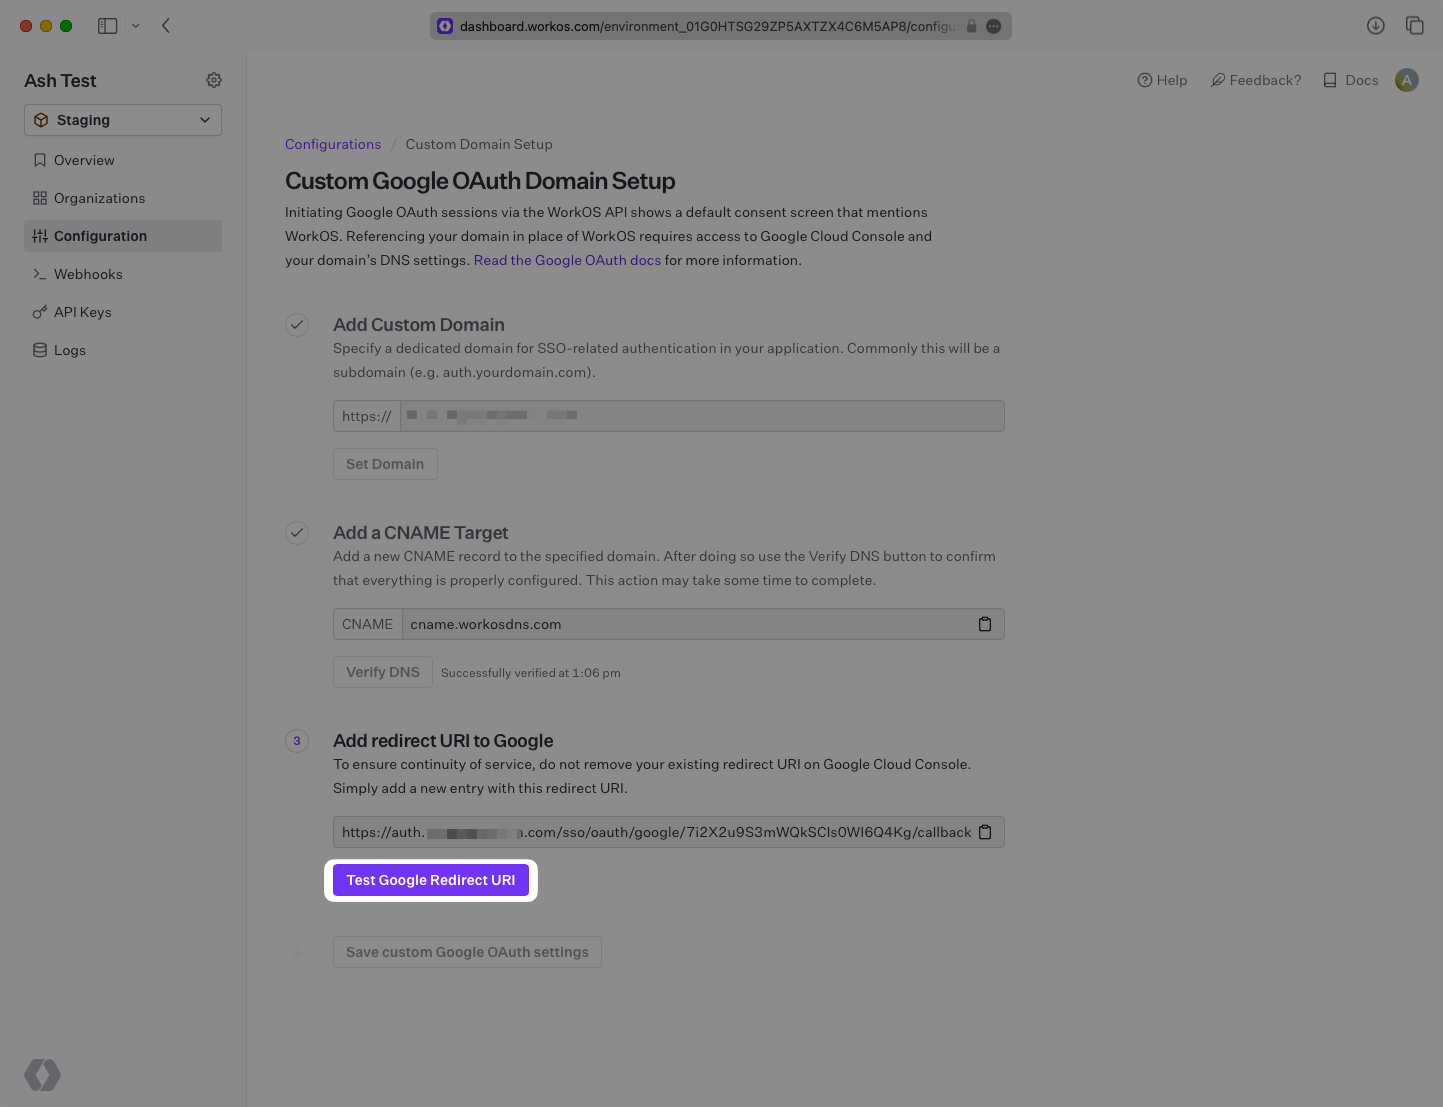 A screenshot showing the "Test Google Redirect URI" button in the WorkOS Dashboard.